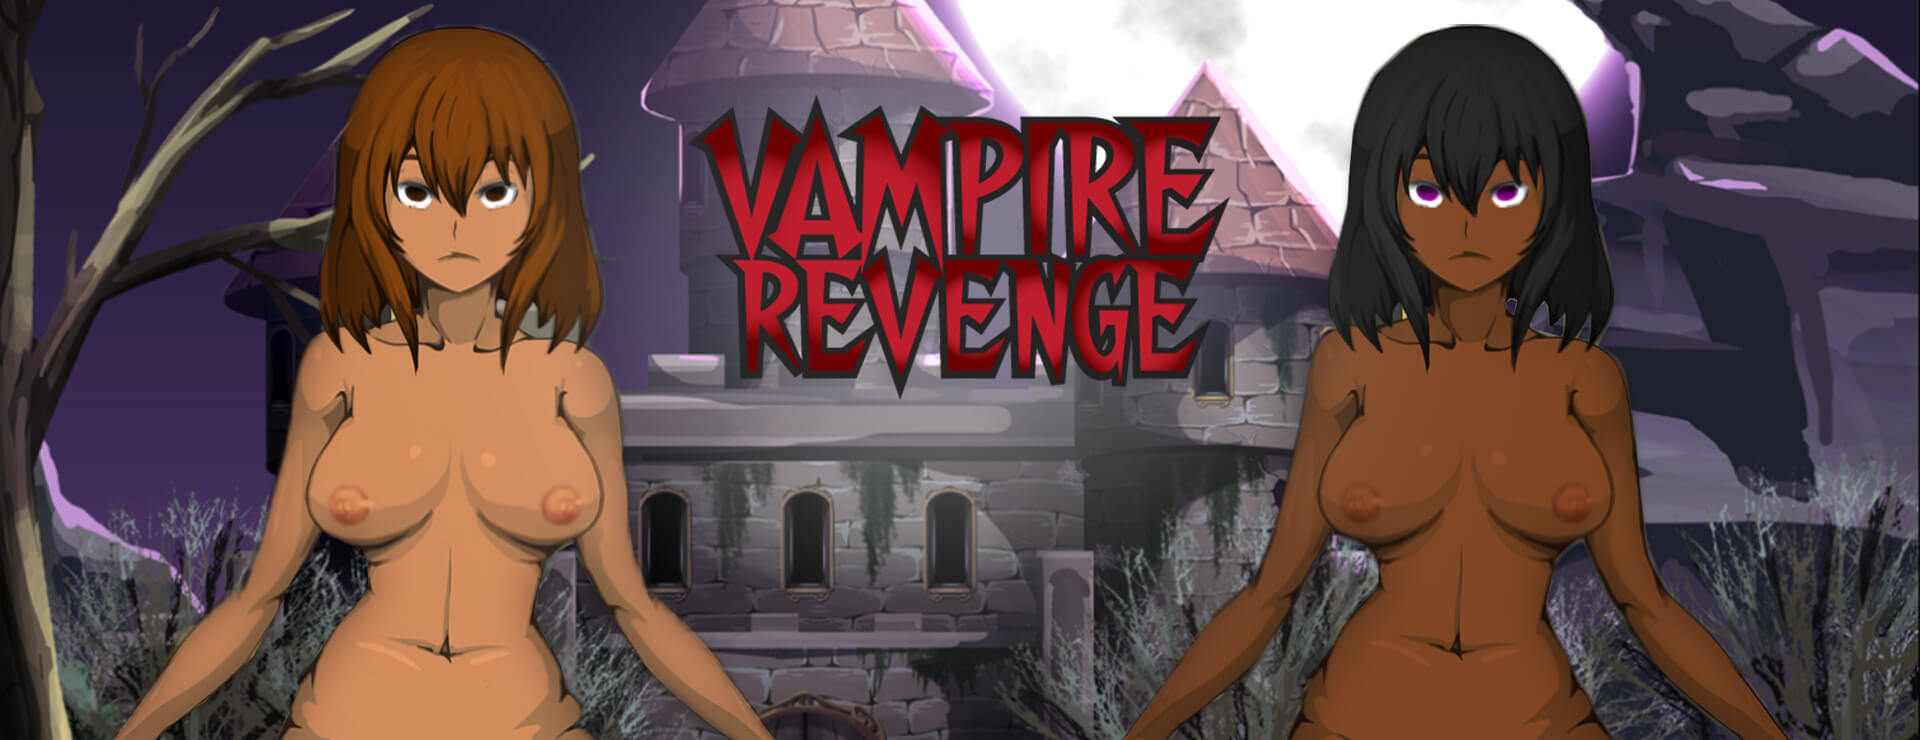 Vampire Revenge - Action Adventure Spiel